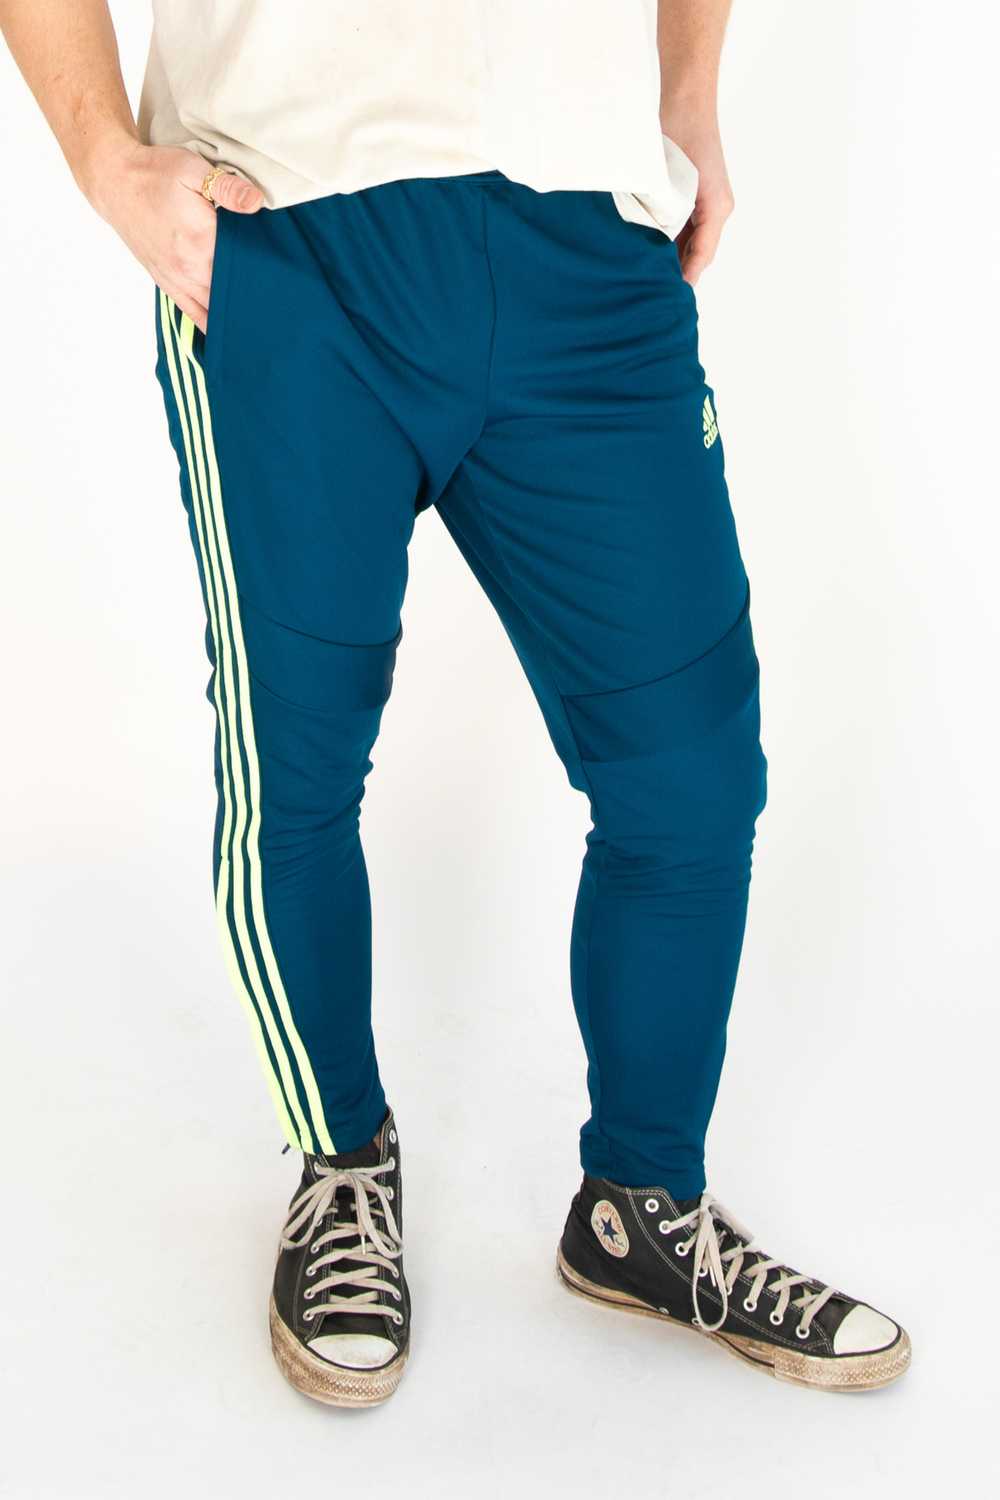 Teal & Lime Adidas Soccer Pants (sz. L) - image 2